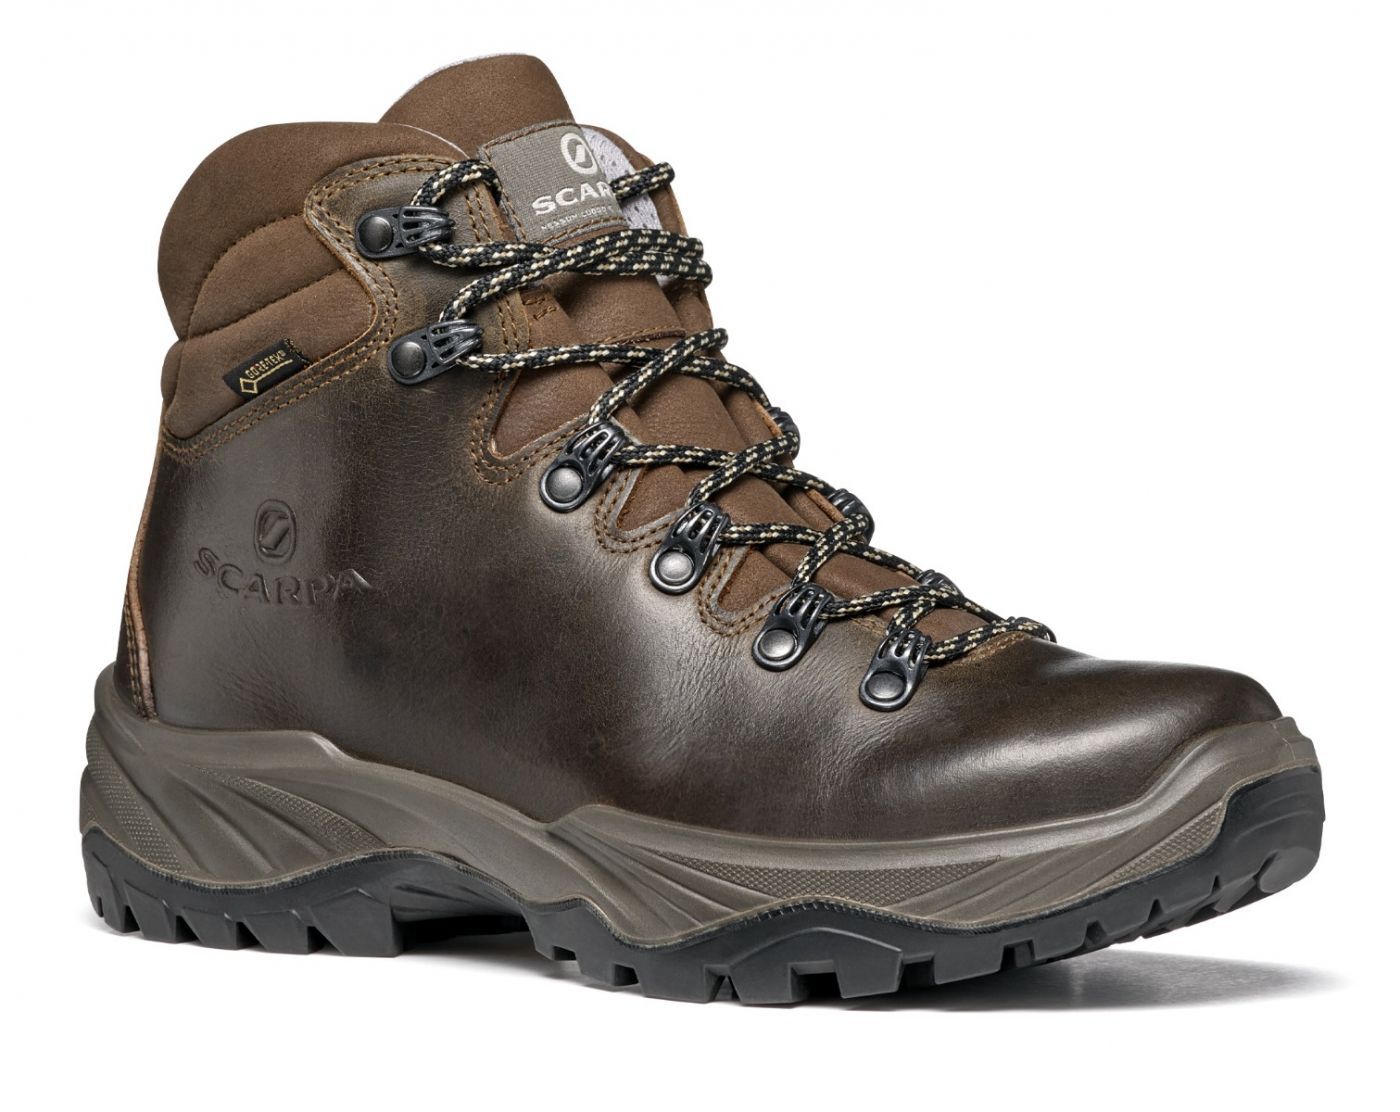 Scarpa Terra GTX Unisex Waterproof Hiking Boots - Brown - US6 / EU38